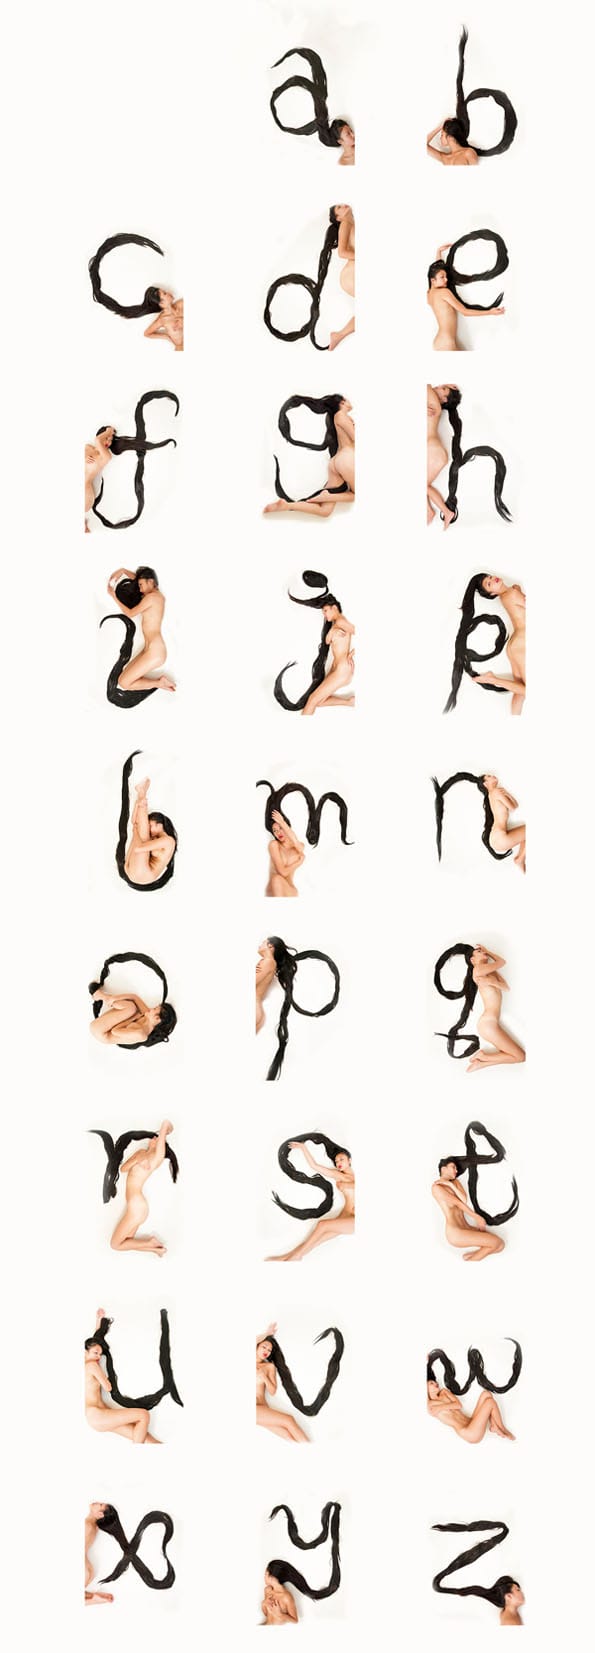 human-hair-alphabet-3